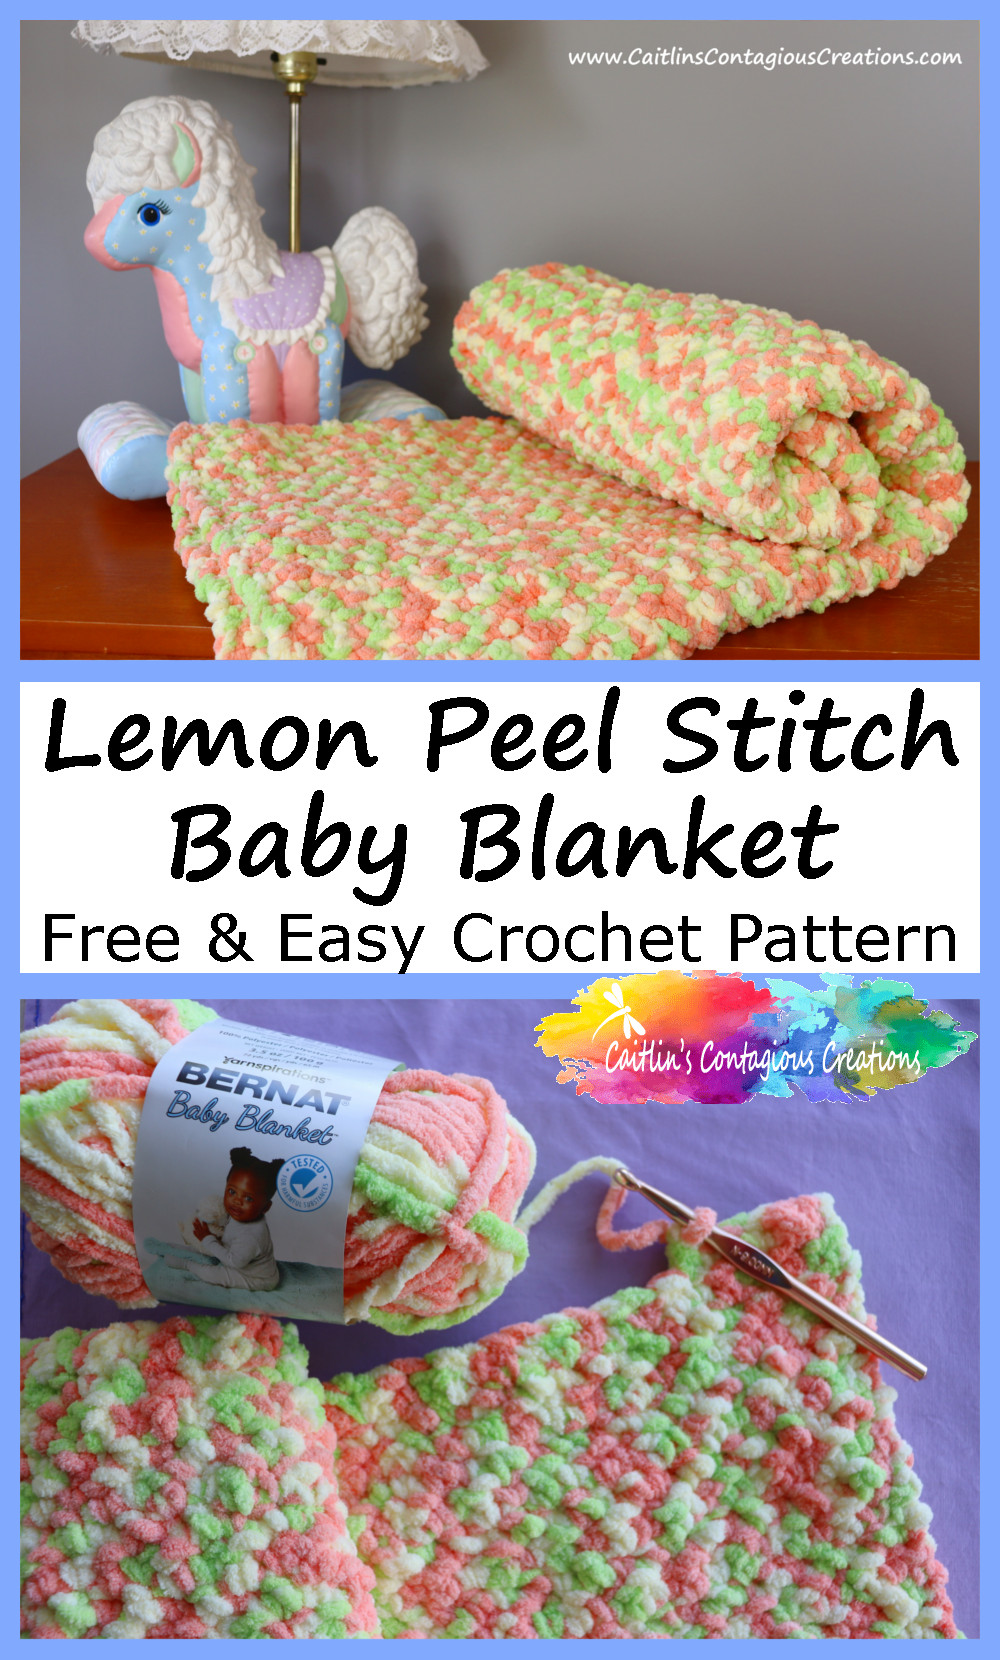 free super bulky baby blanket yarn and 9 mm crochet hook in use for lemon peel texture crochet pattern